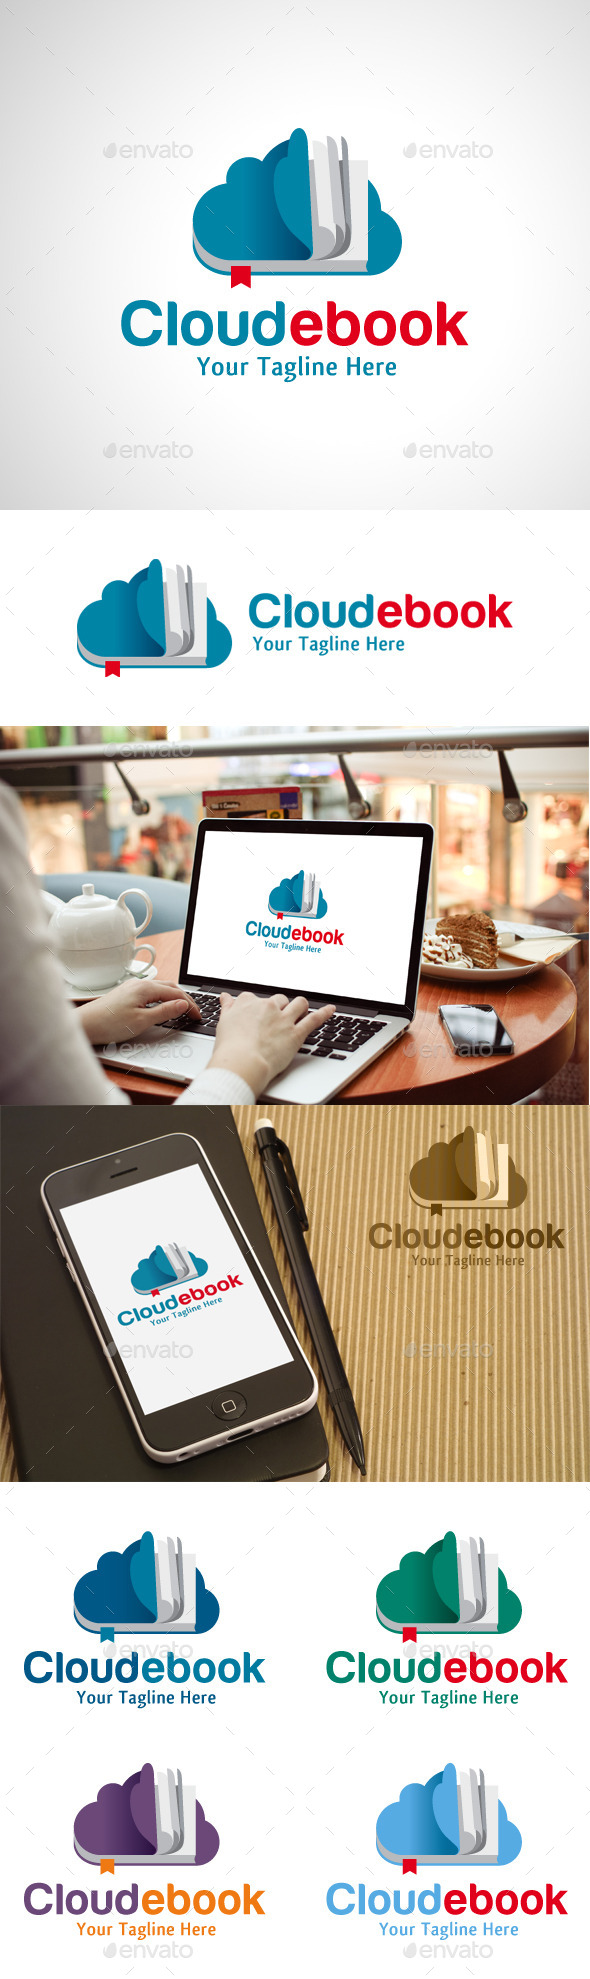 Cloud Ebook Logo